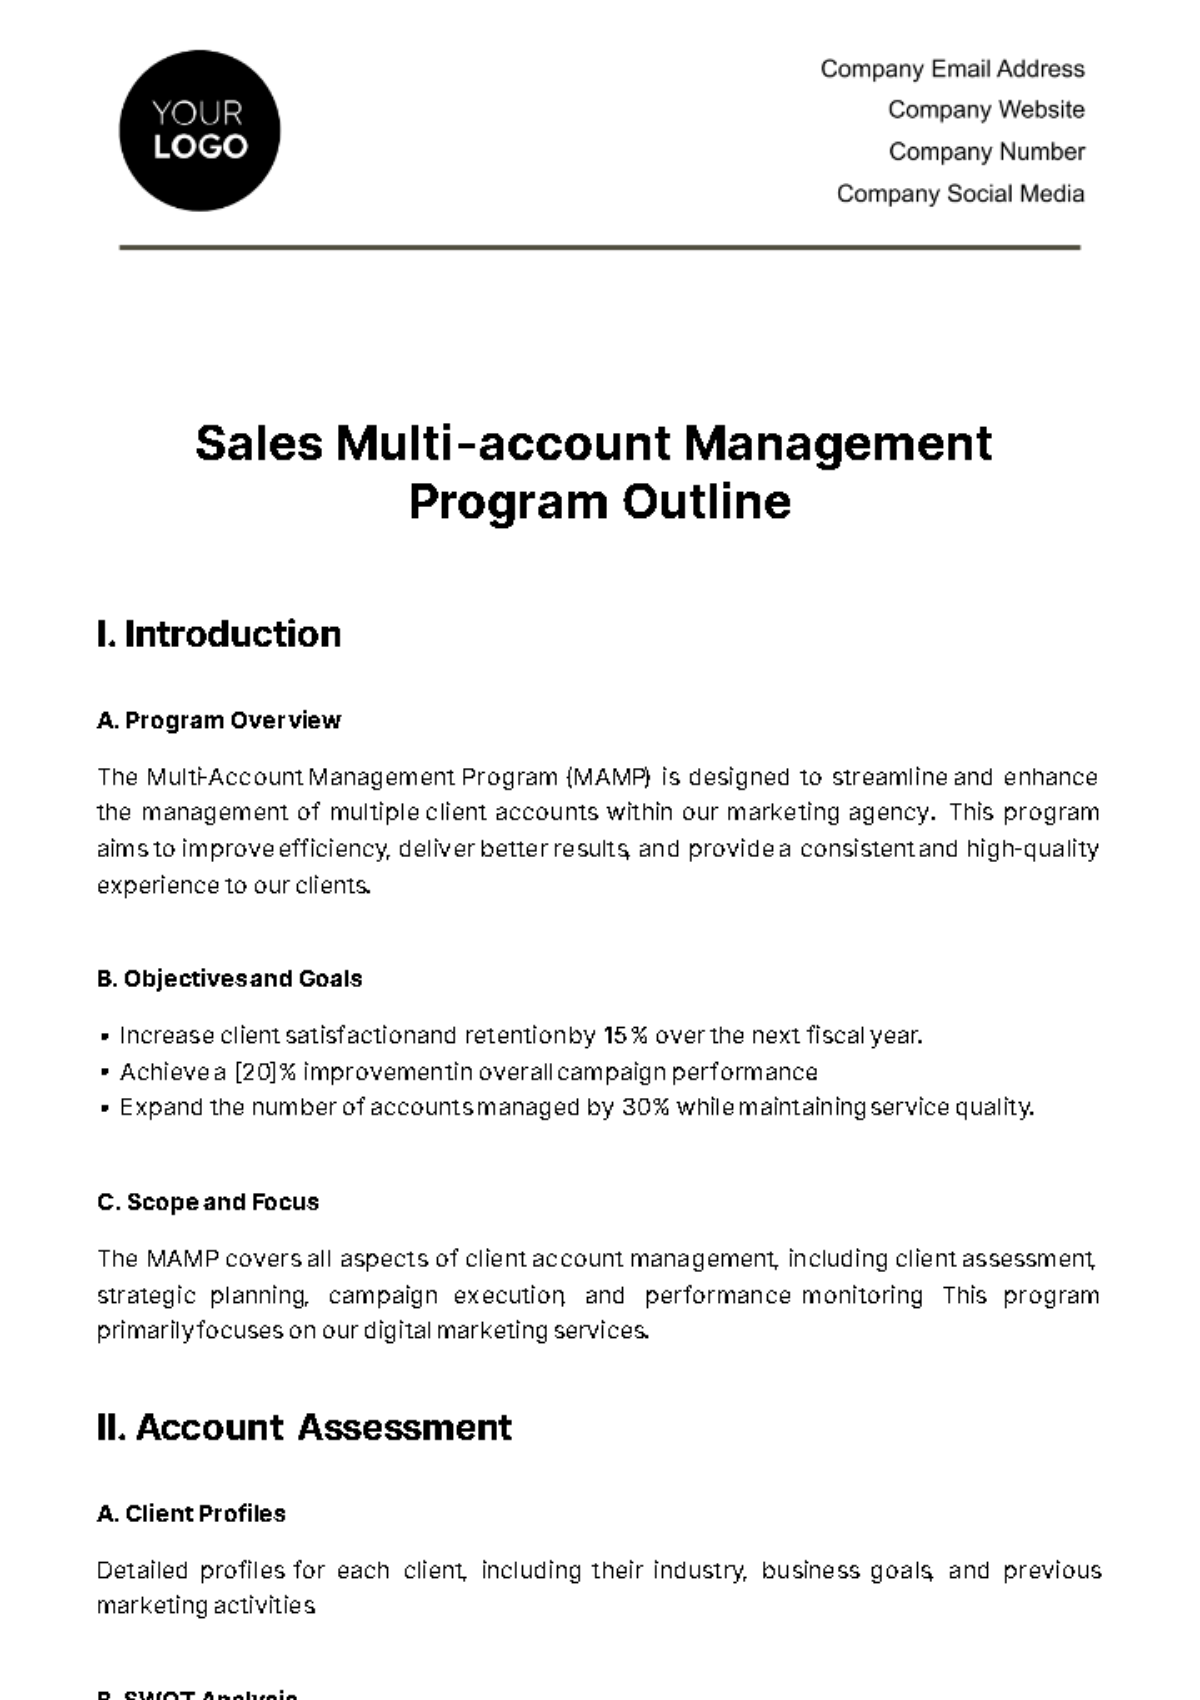 Free Sales Multi-account Management Program Outline Template